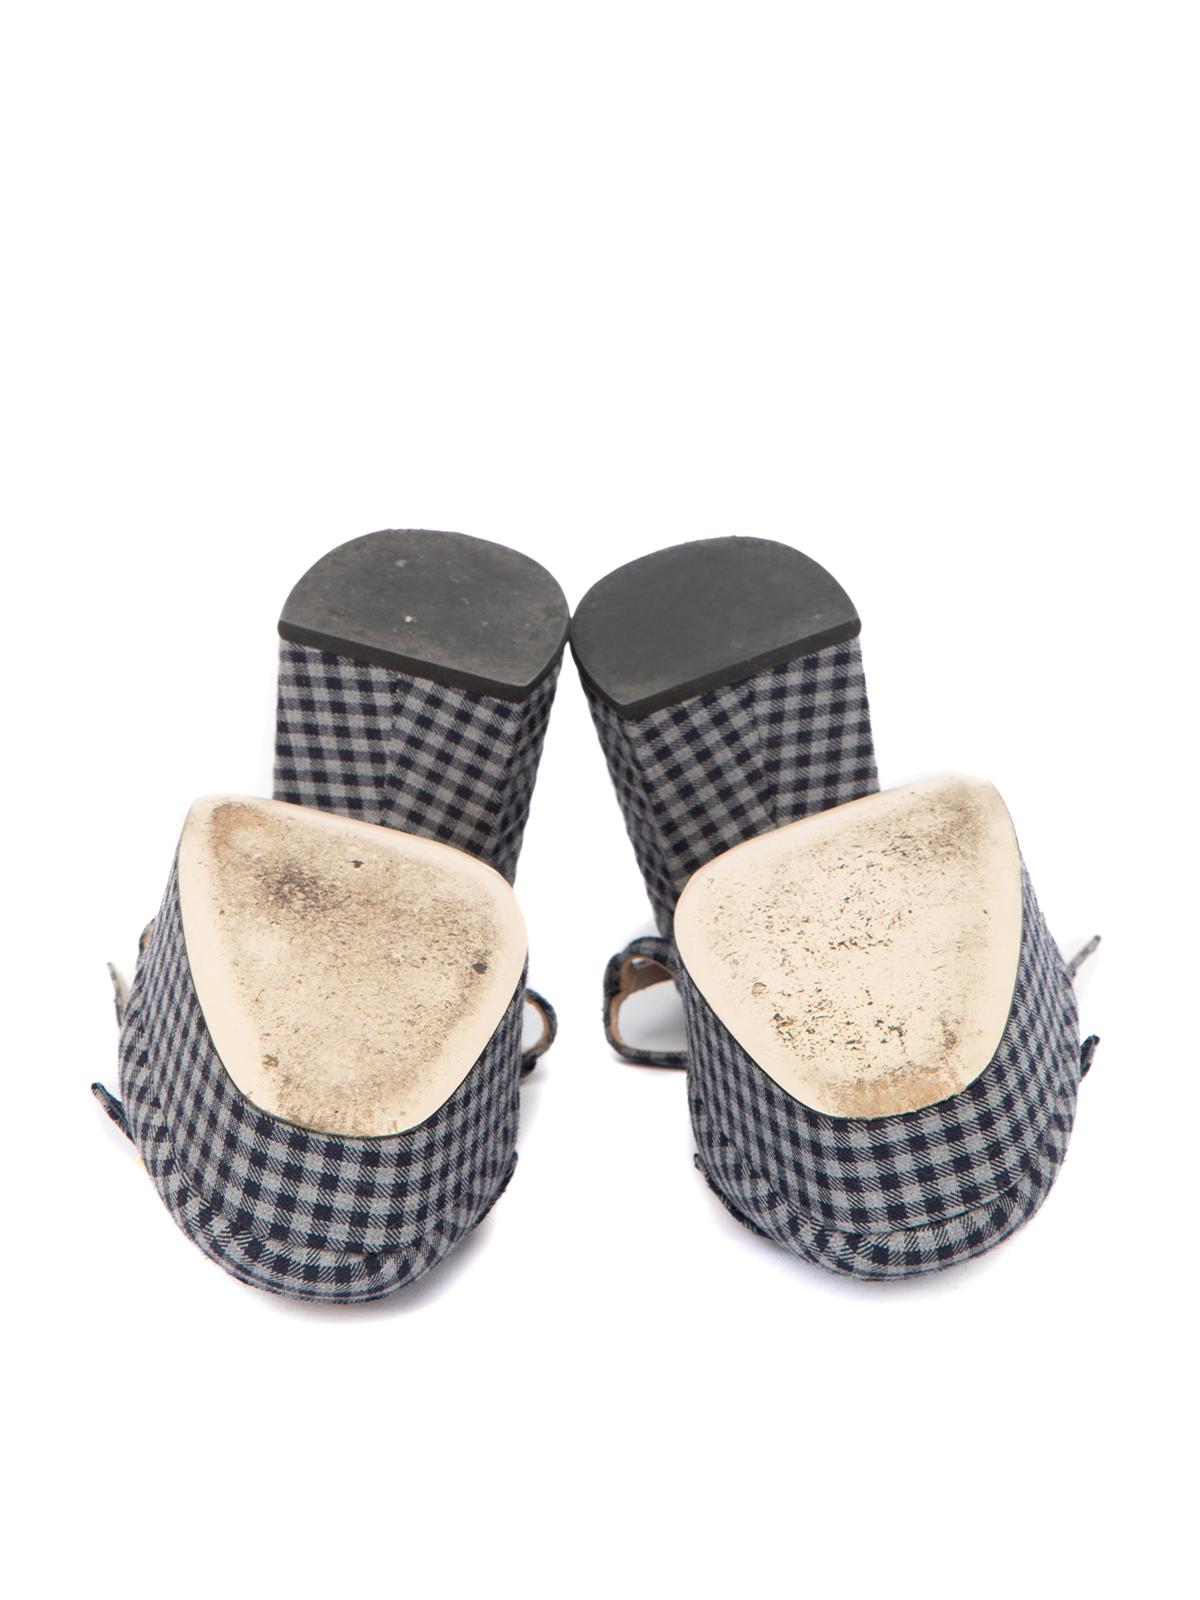 Pre-Loved Fendi Women's Gingham Vichy Promenade Moccasin Sandals 1